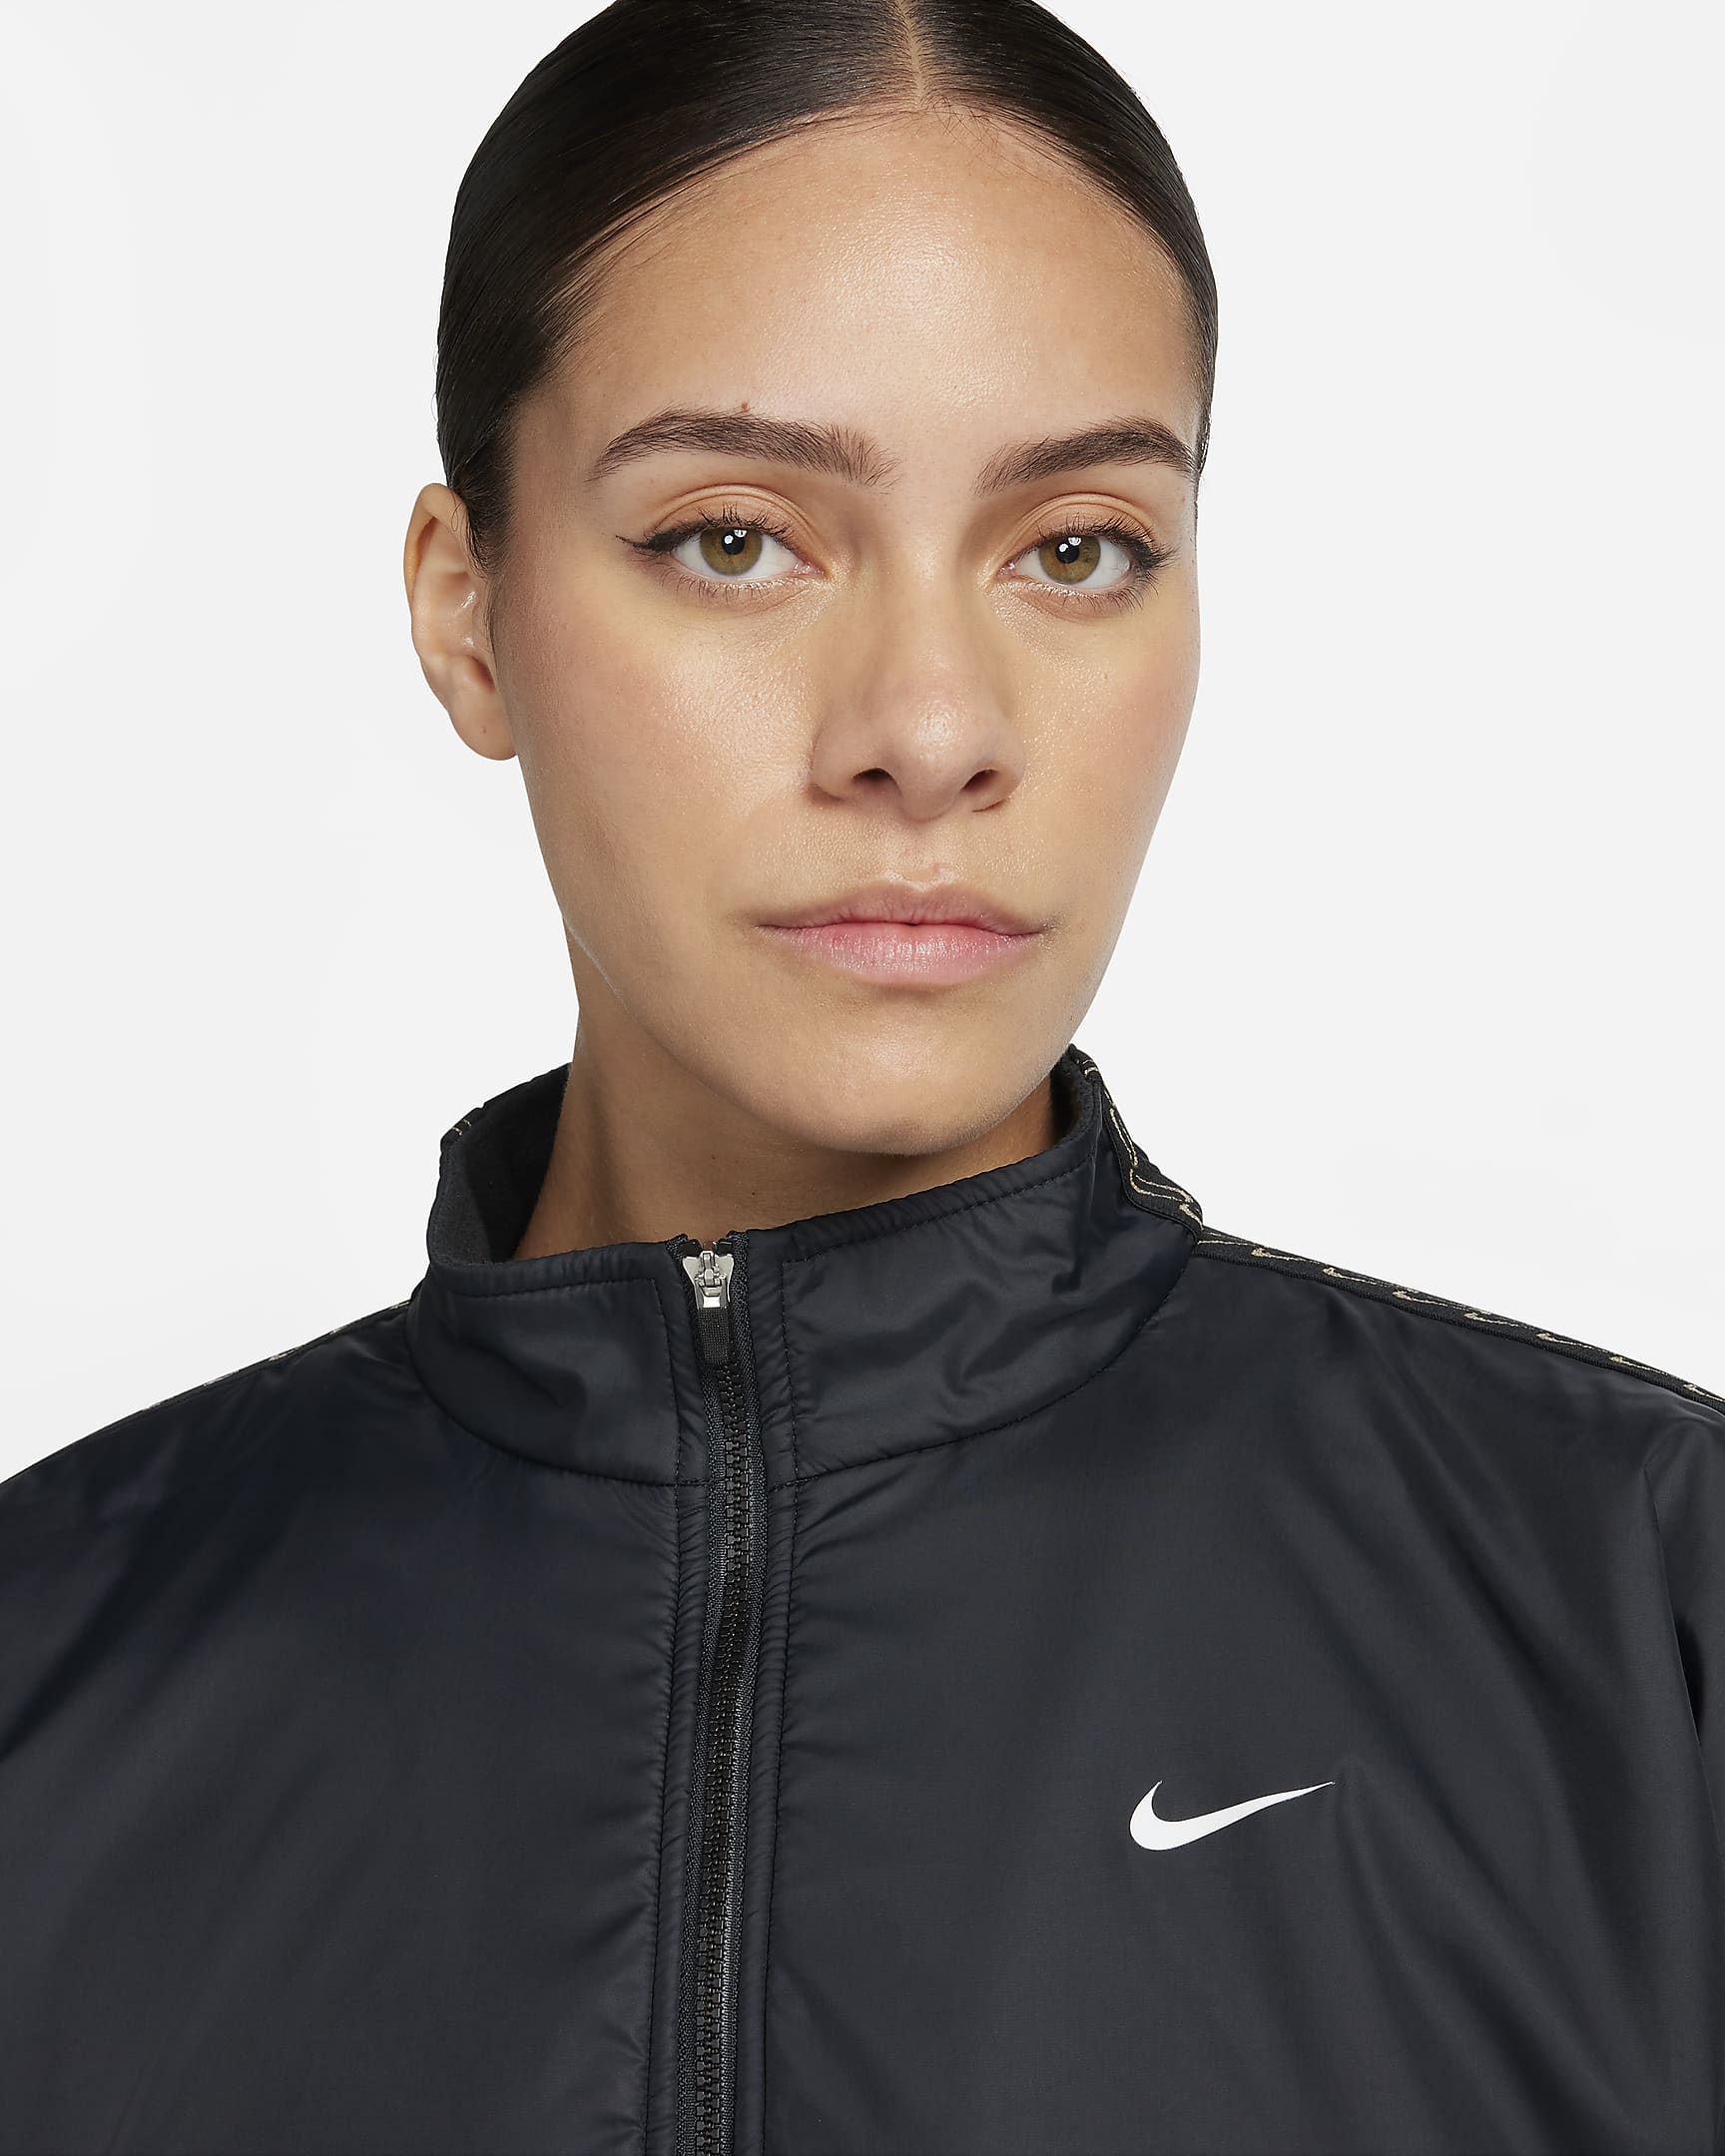 Nike Therma-FIT One Women's Fleece Full-Zip Jacket. Nike AT